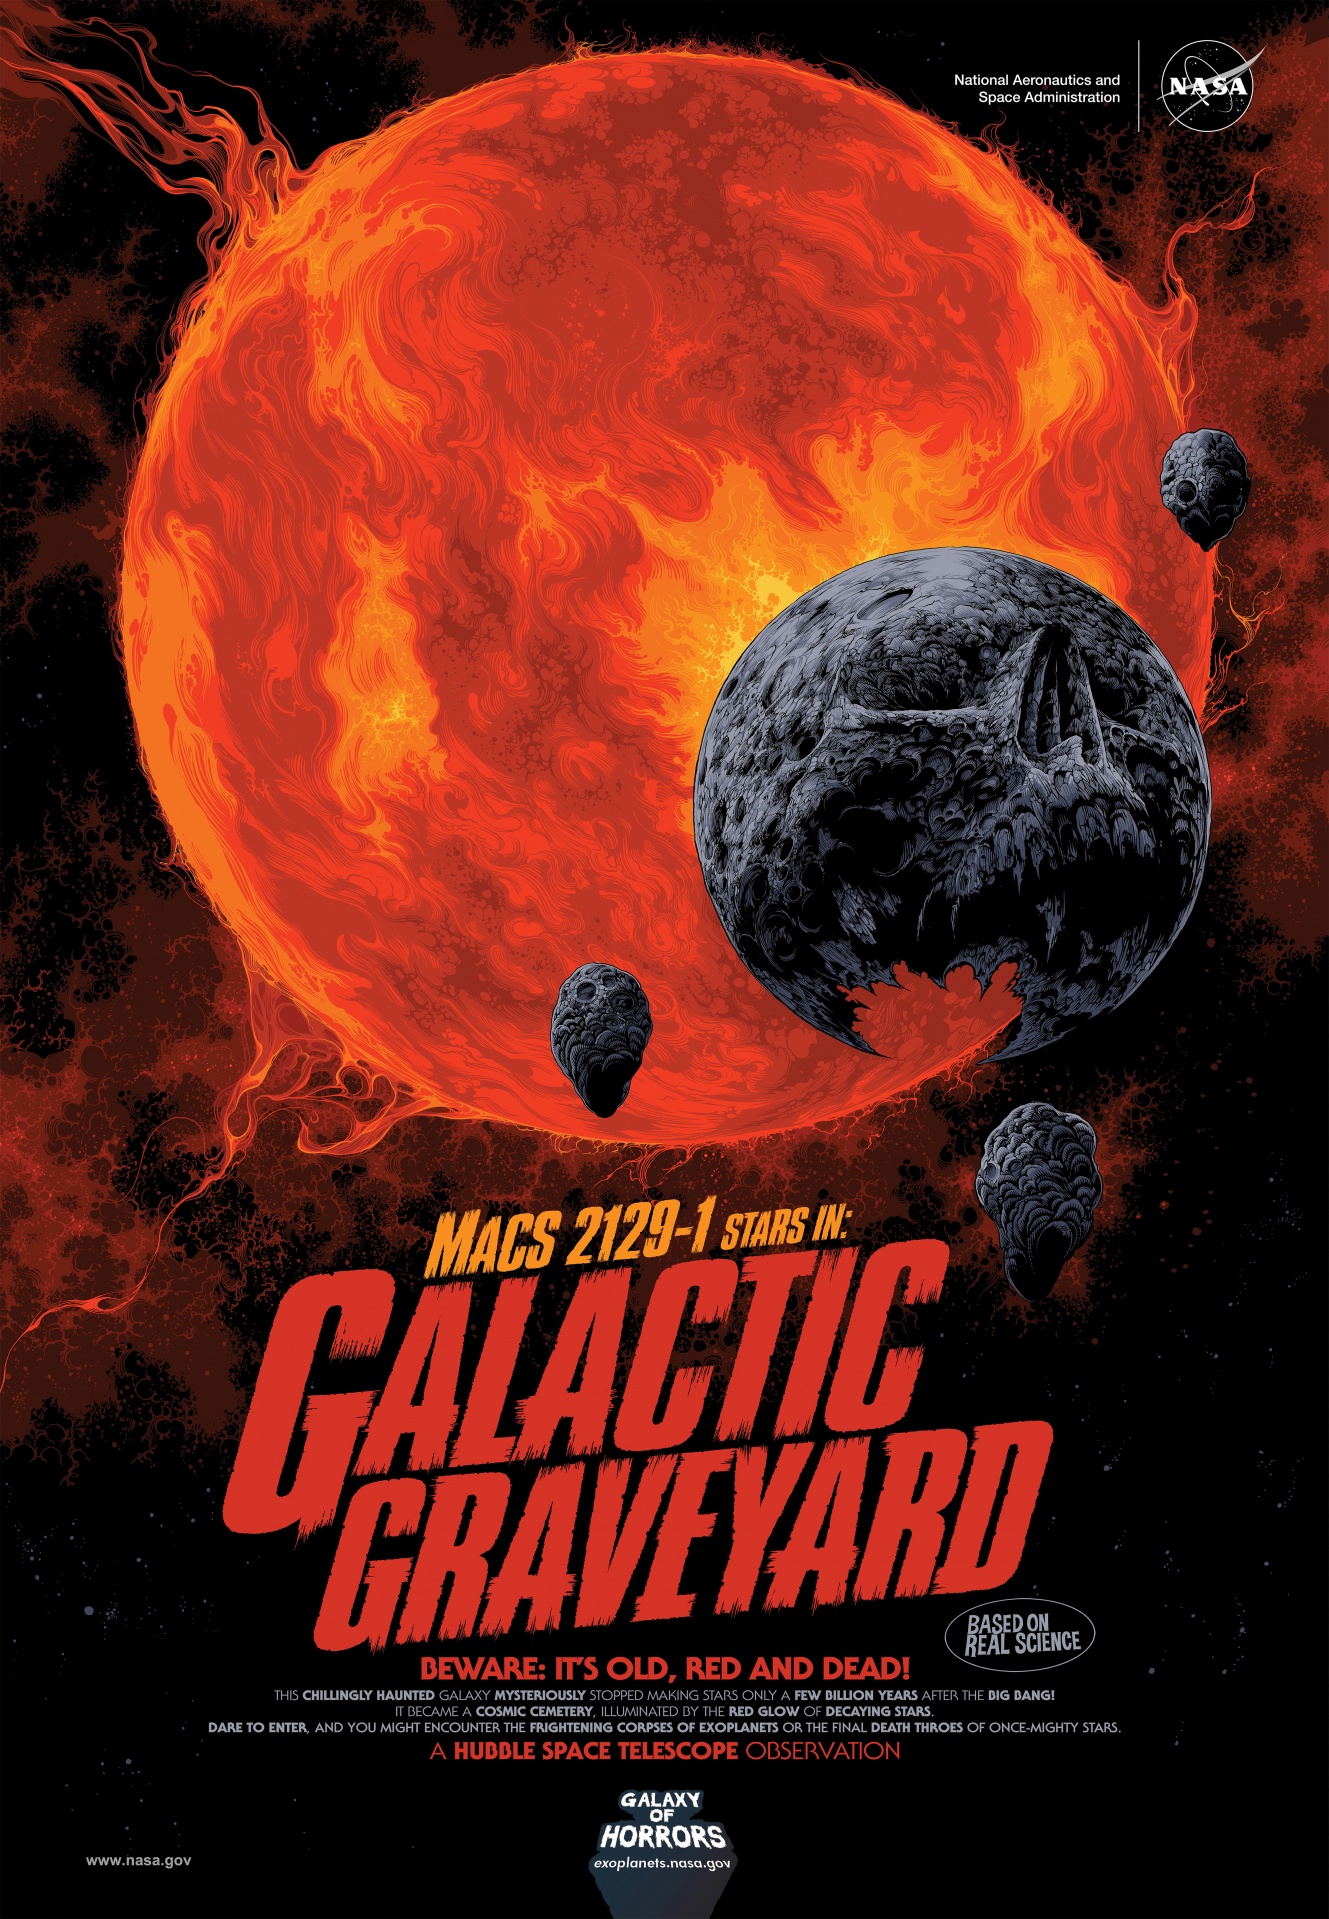 Galactic Graveyard